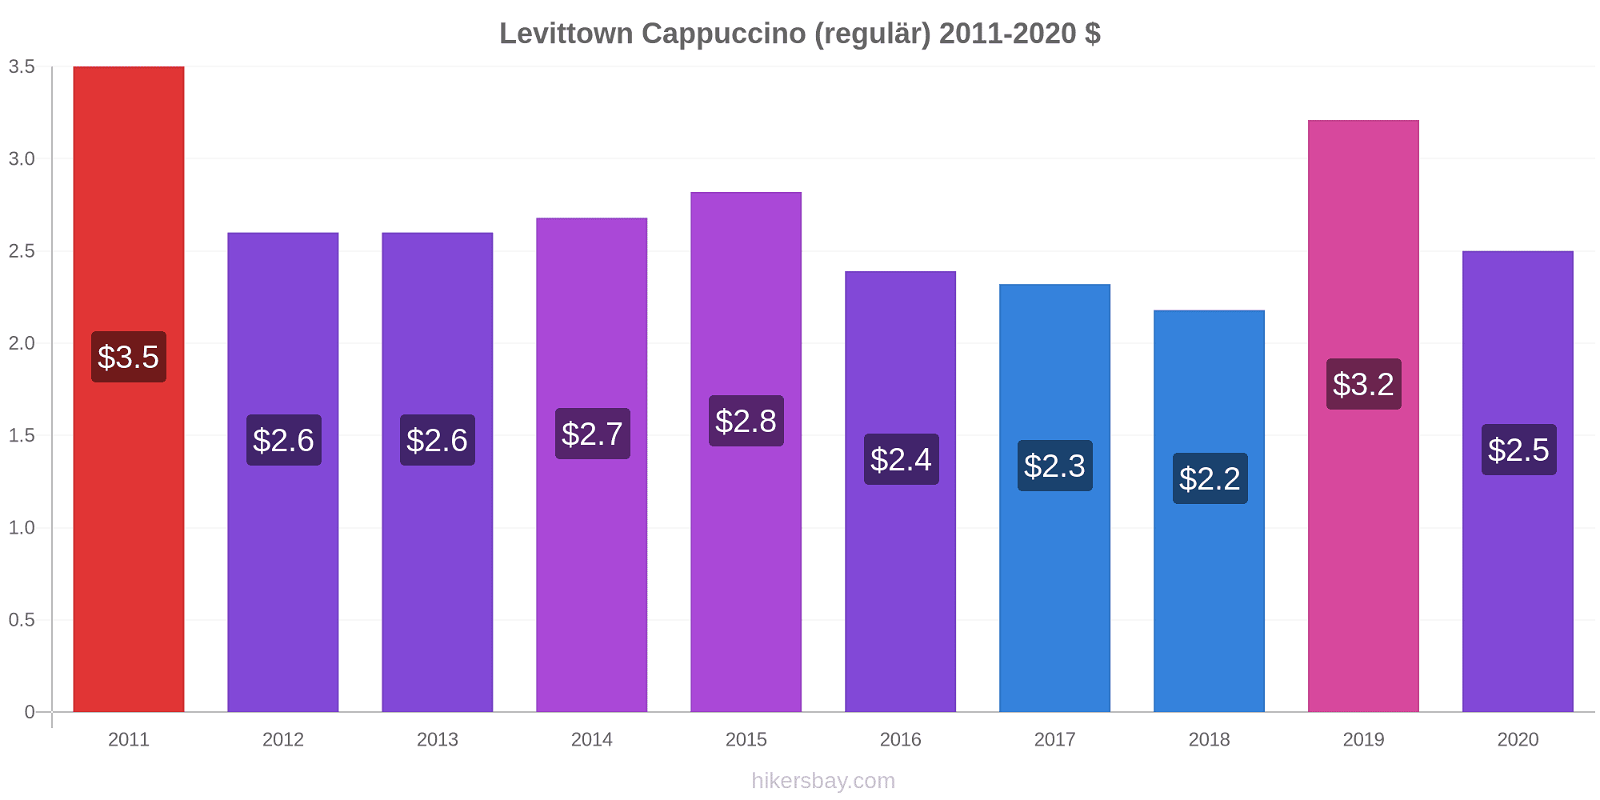 Levittown Preisänderungen Cappuccino (regulär) hikersbay.com